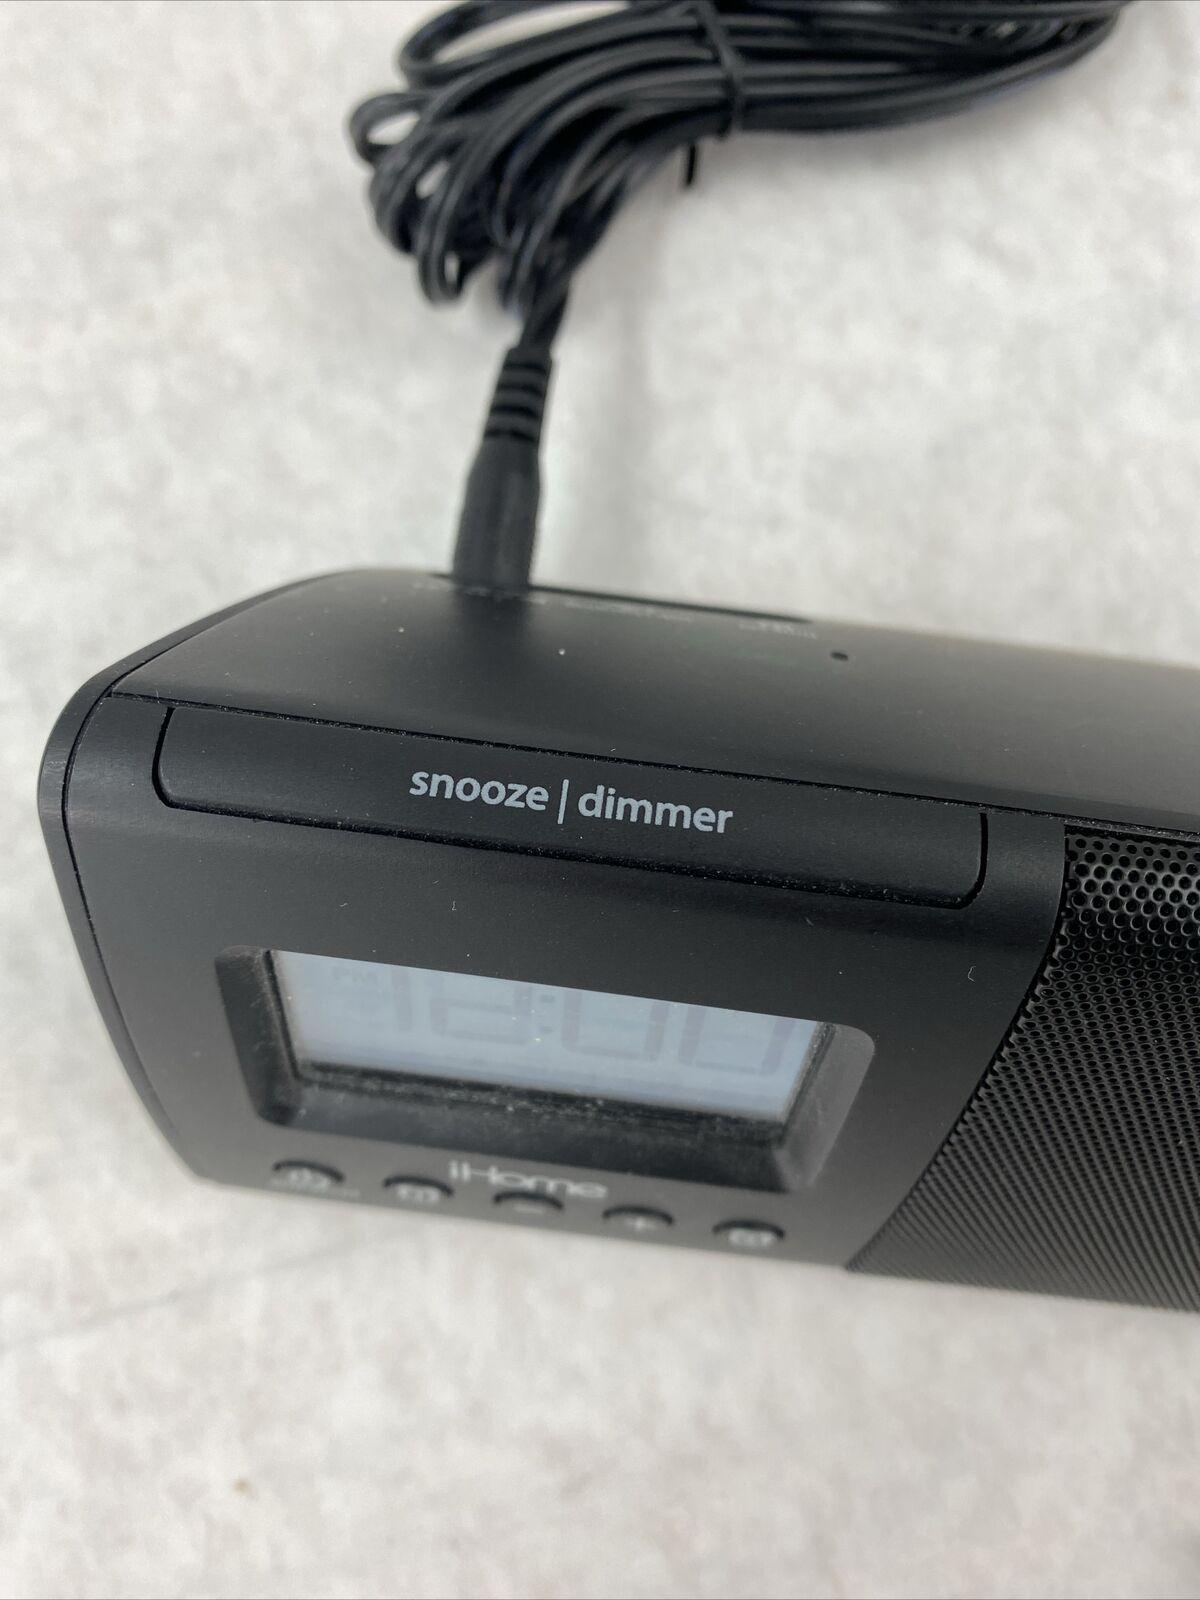 iHome iHM46BC Portable USB Charging Dual Alarm Clock Speaker System  - Black